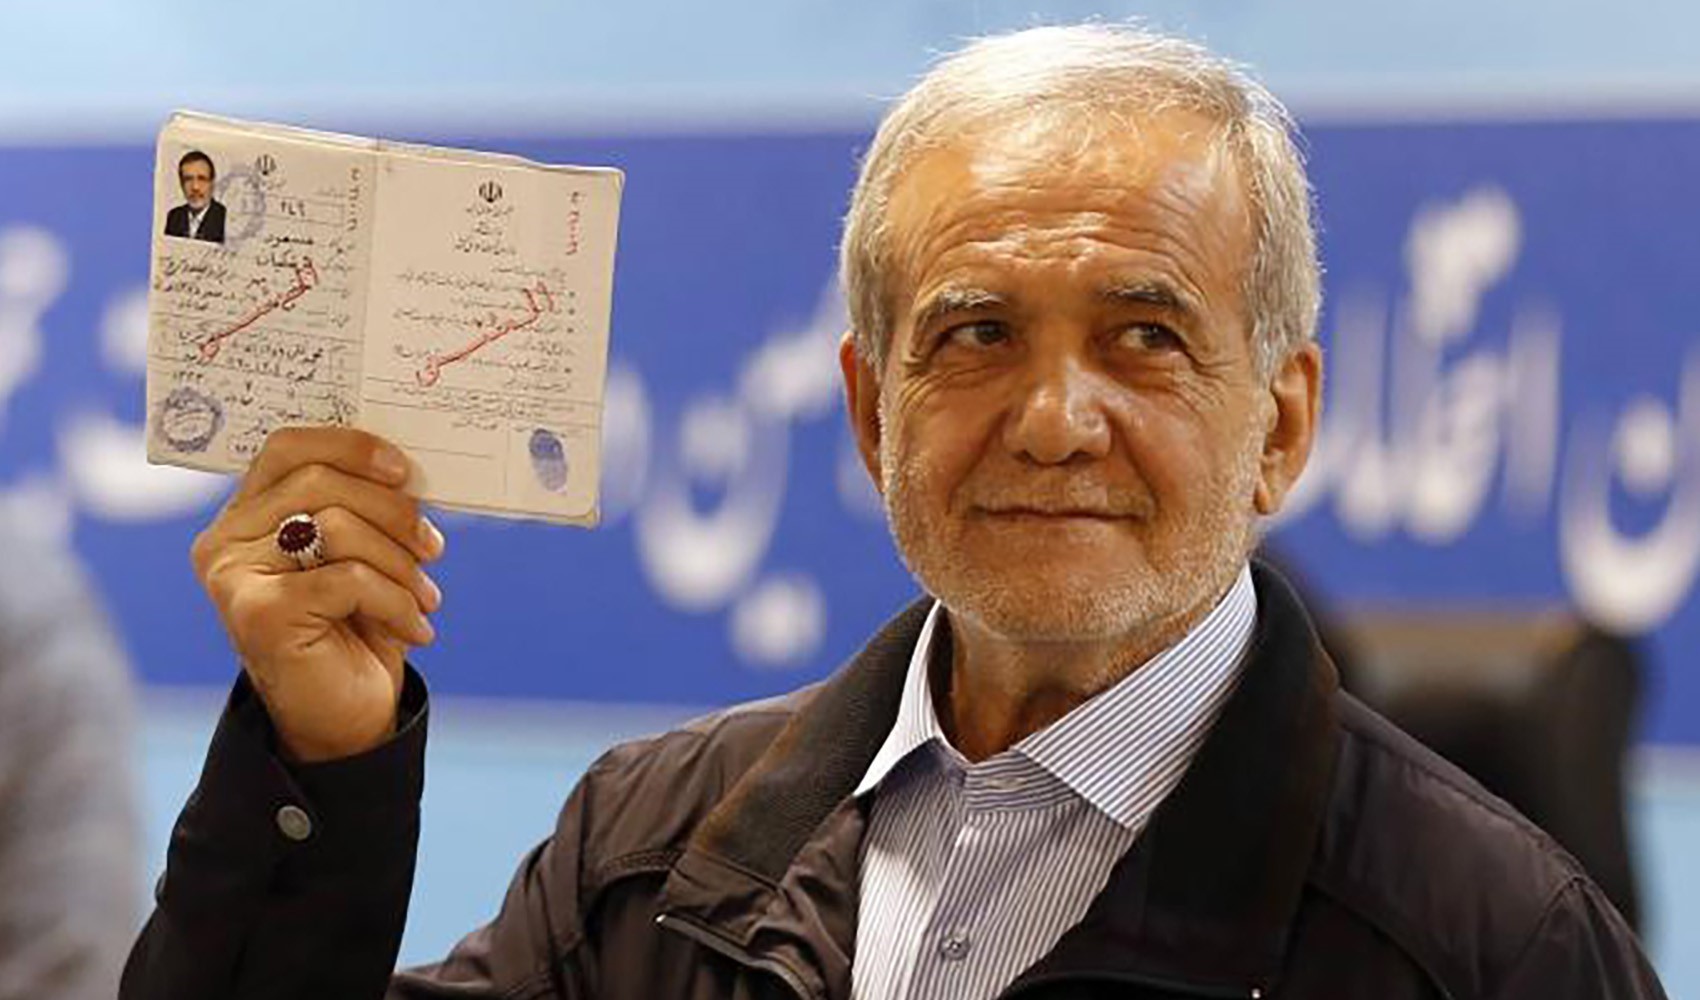 İran'da cumhurbaşkanı adayından 'başörtüsü' eleştirisi